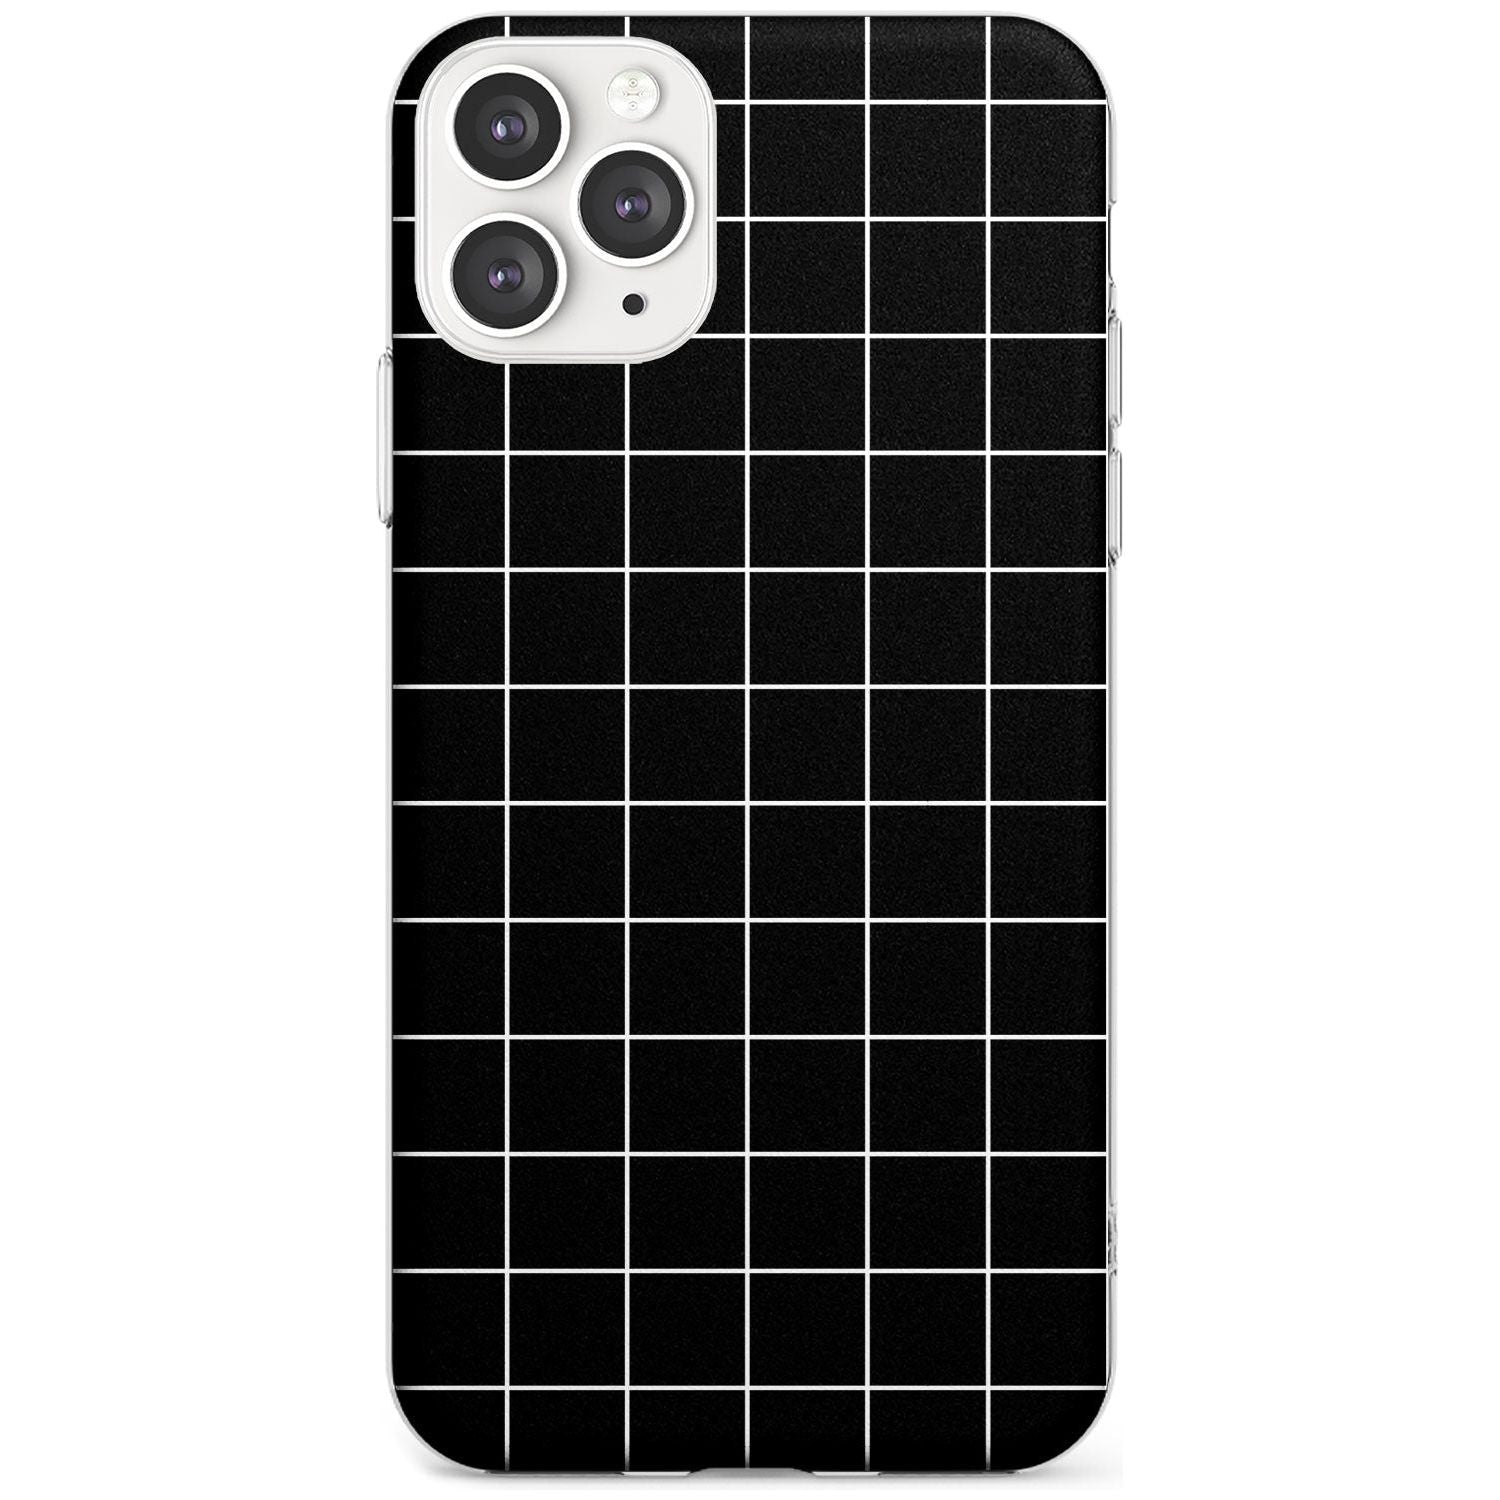 Simplistic Large Grid Pattern Black Slim TPU Phone Case for iPhone 11 Pro Max